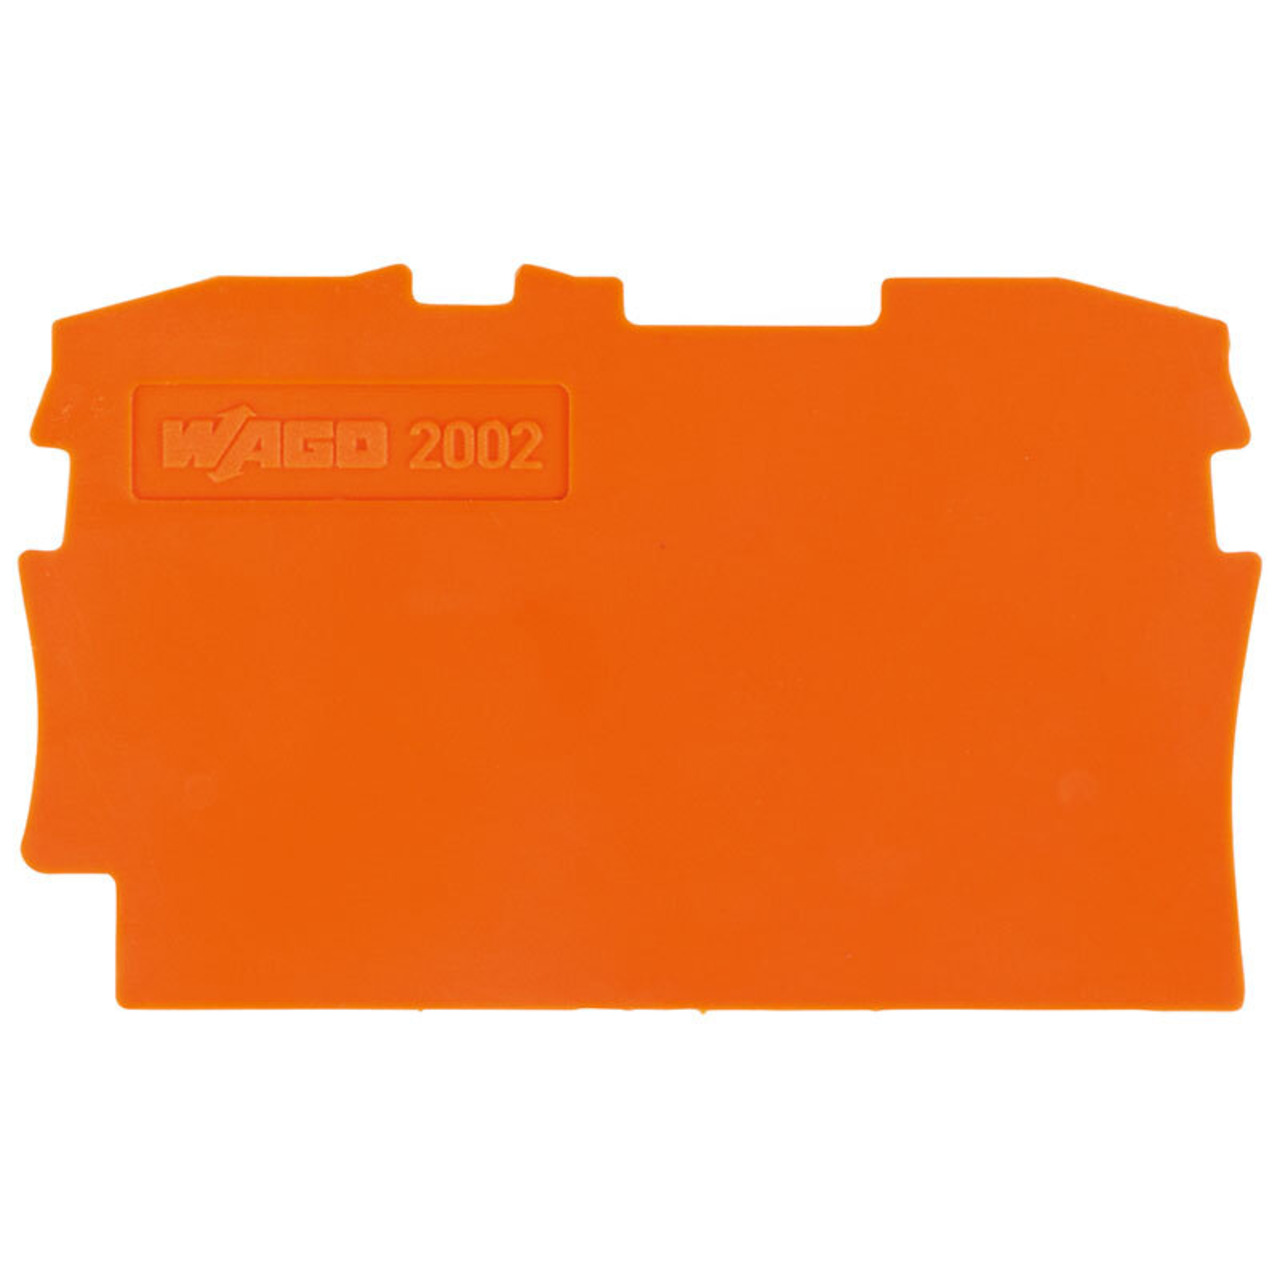 Wago Trennplatte 2002-1294- orange- 2 mm dick